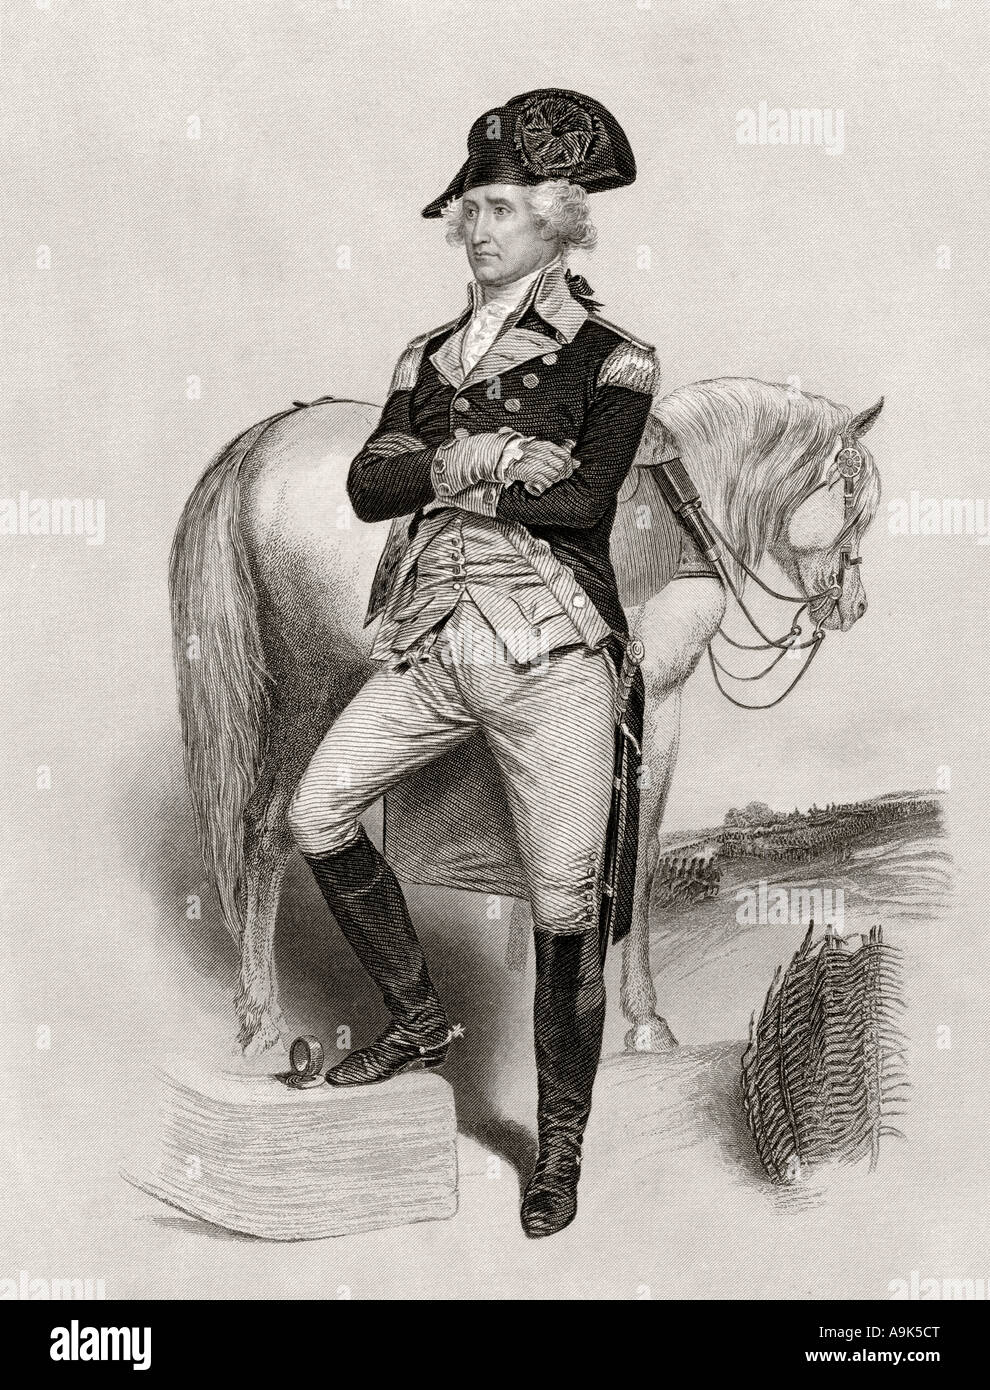 George Washington, 1732 - 1799, seen here in 1775. Stock Photo